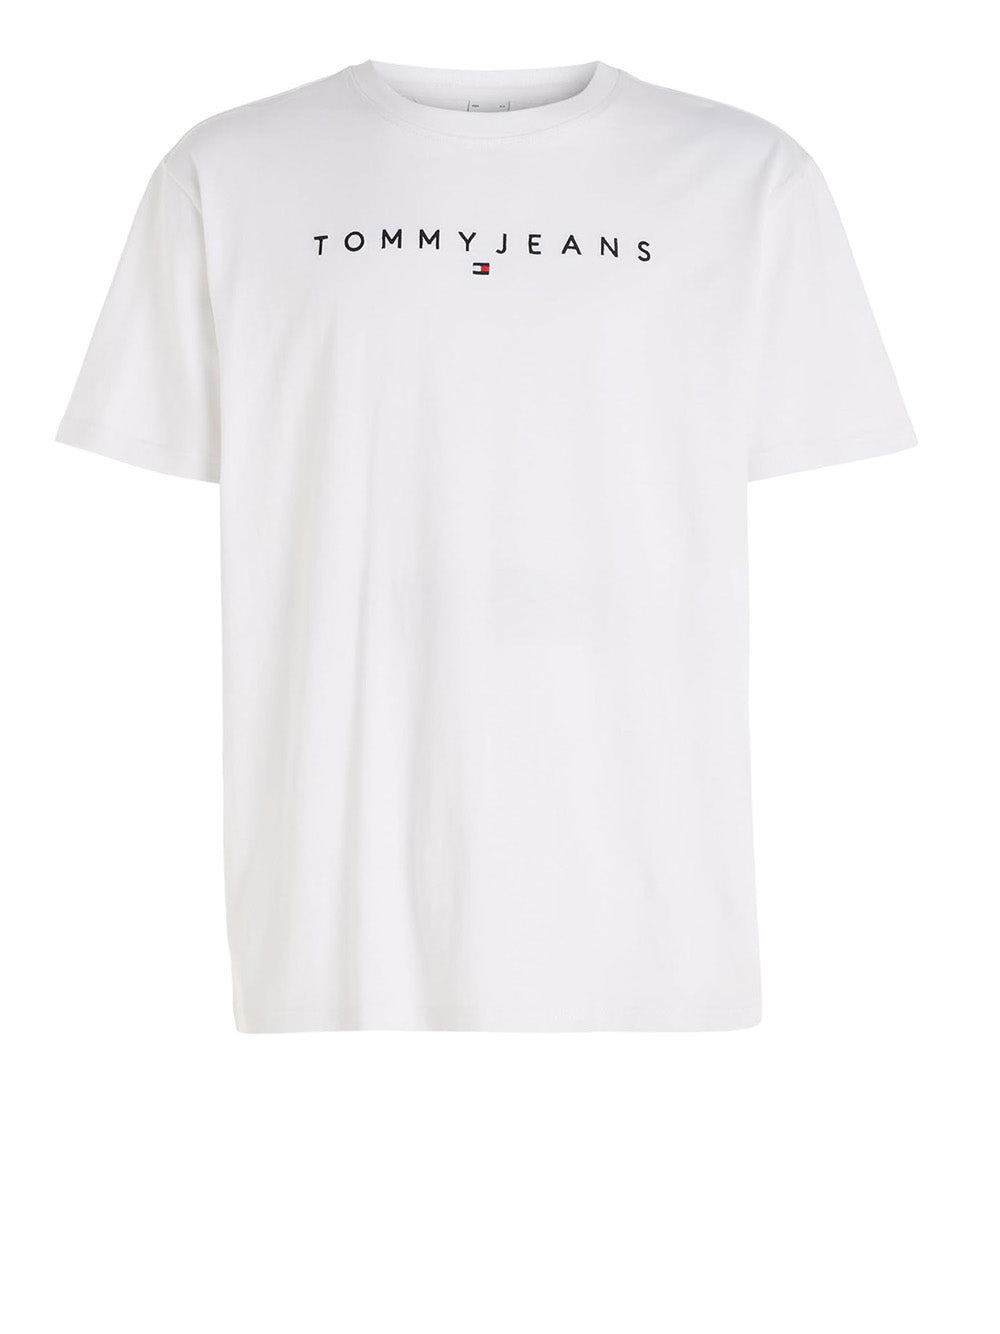 TOMMY HILFIGER T-shirt Uomo - Bianco modello DM0DM17993